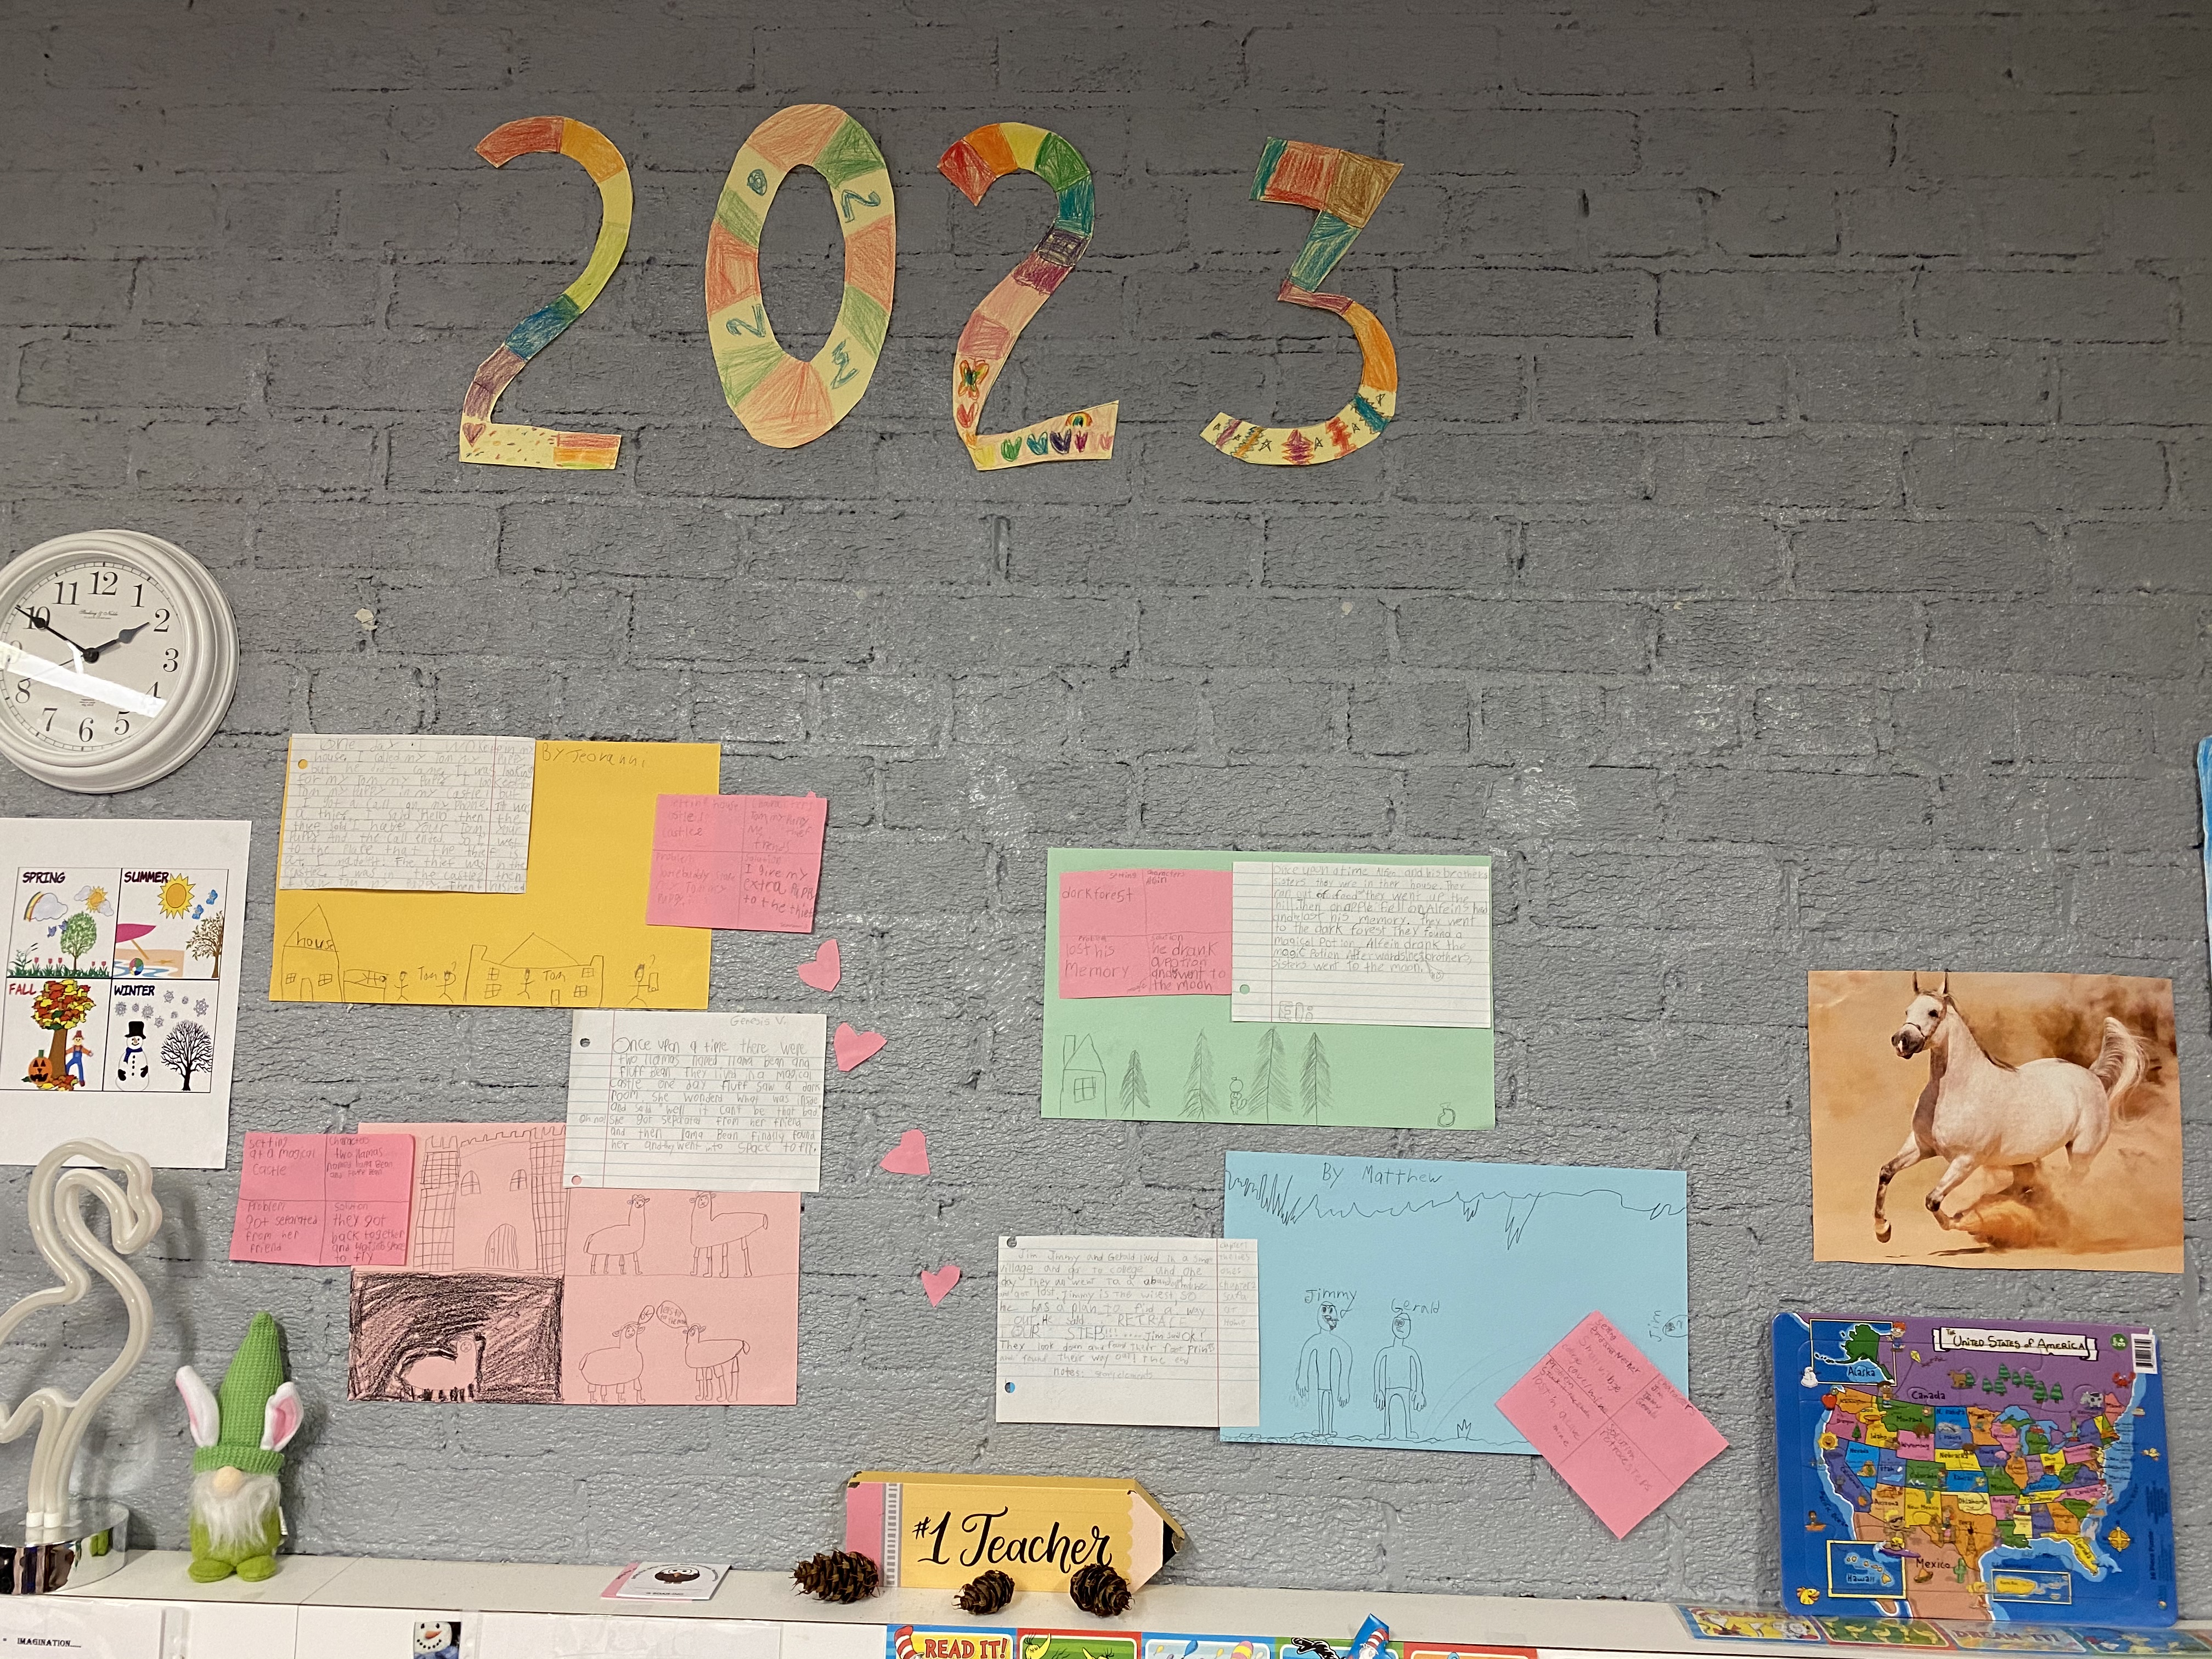 The Wall of Fame inside Miss Goldmann's classroom